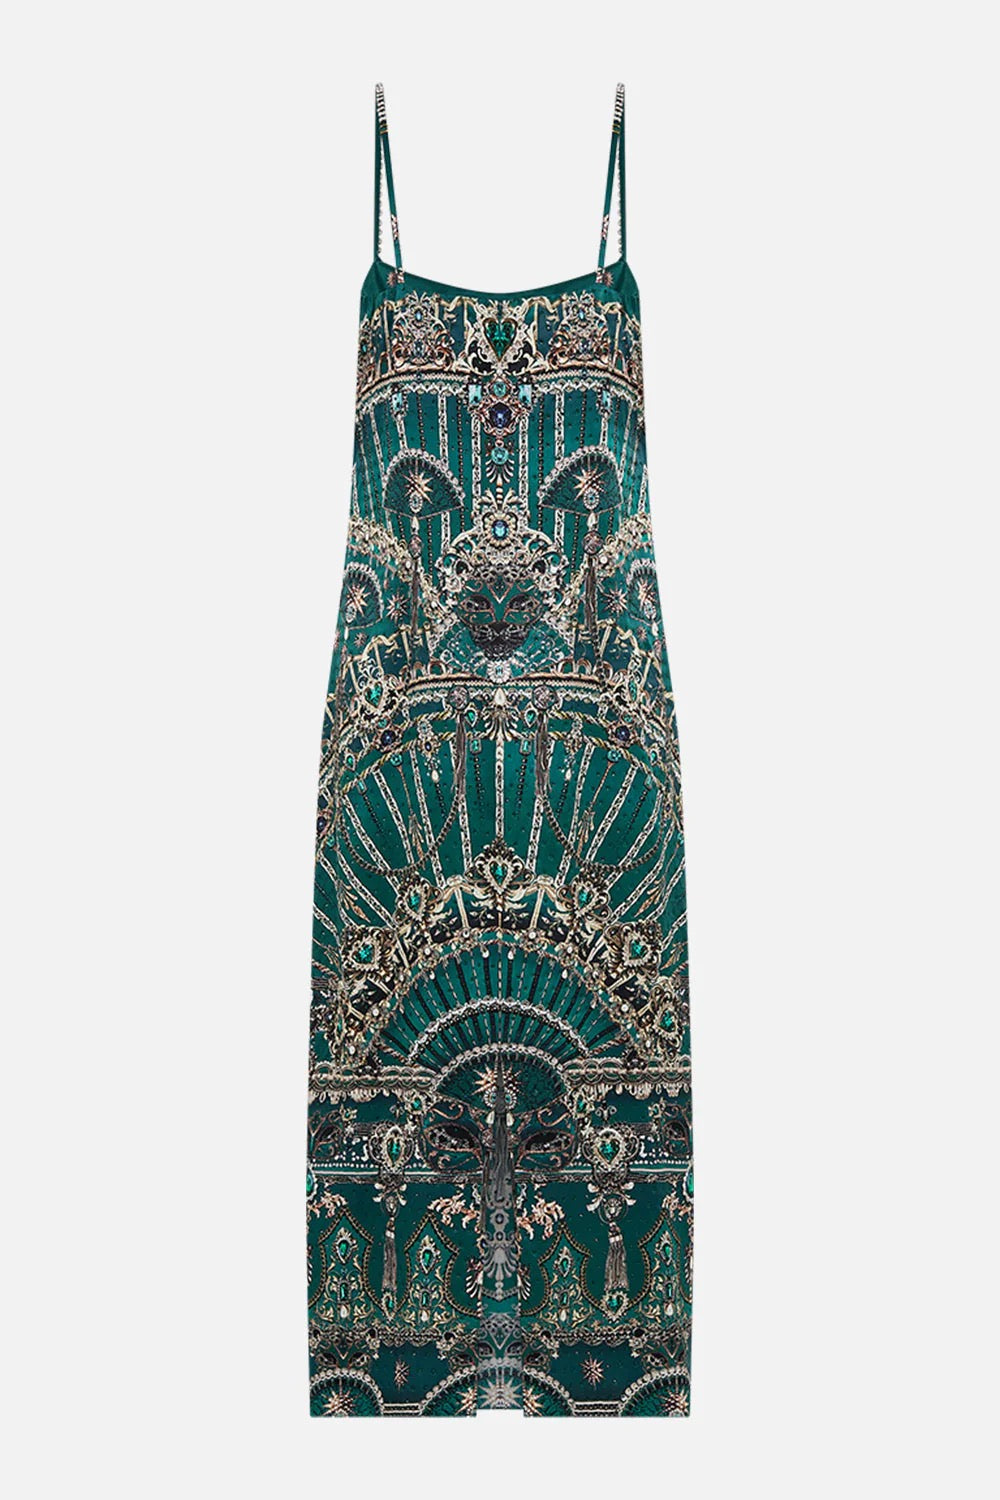 A Venice Veil Square Neck Midi Slip Dress